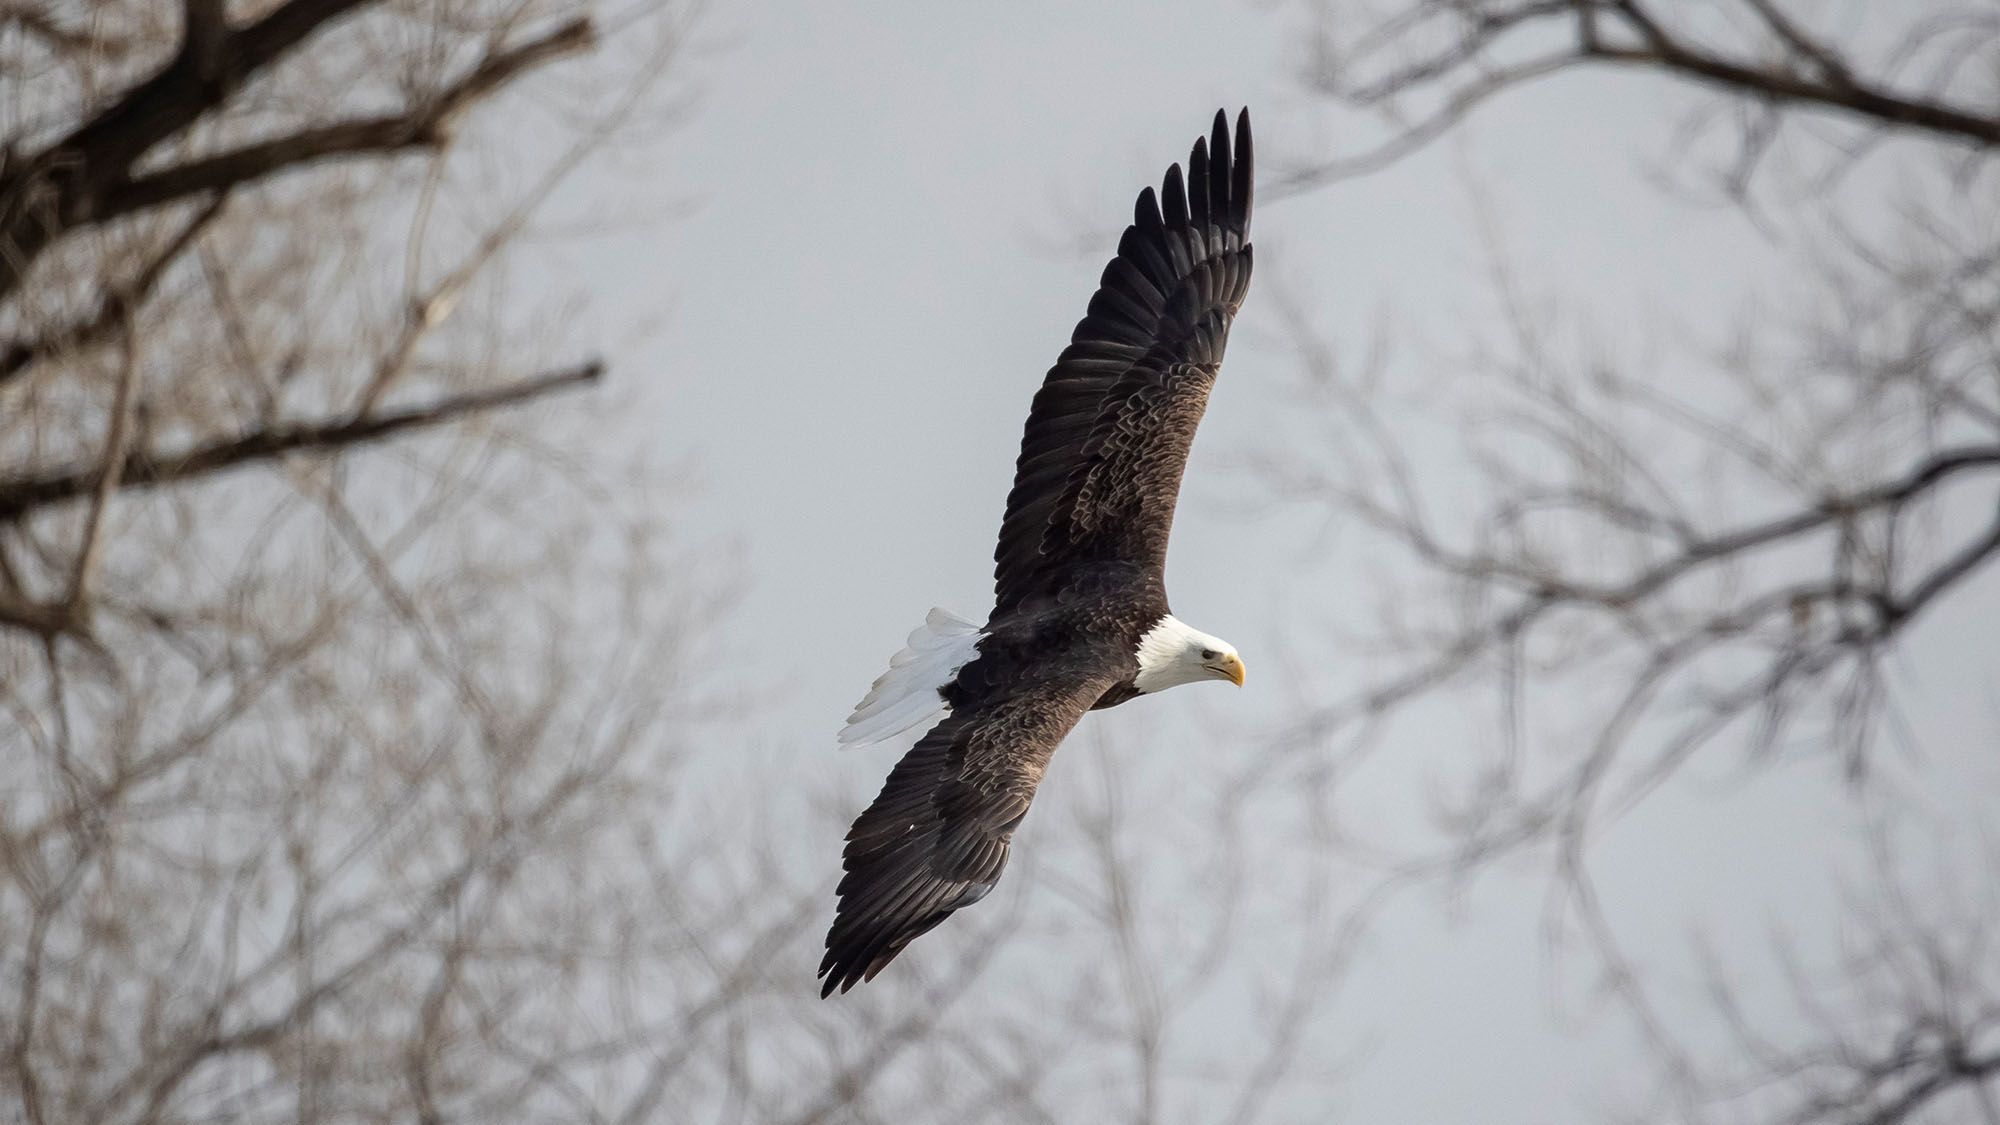 America's Bald Eagle Population Has Quadrupled, Wildlife Officials